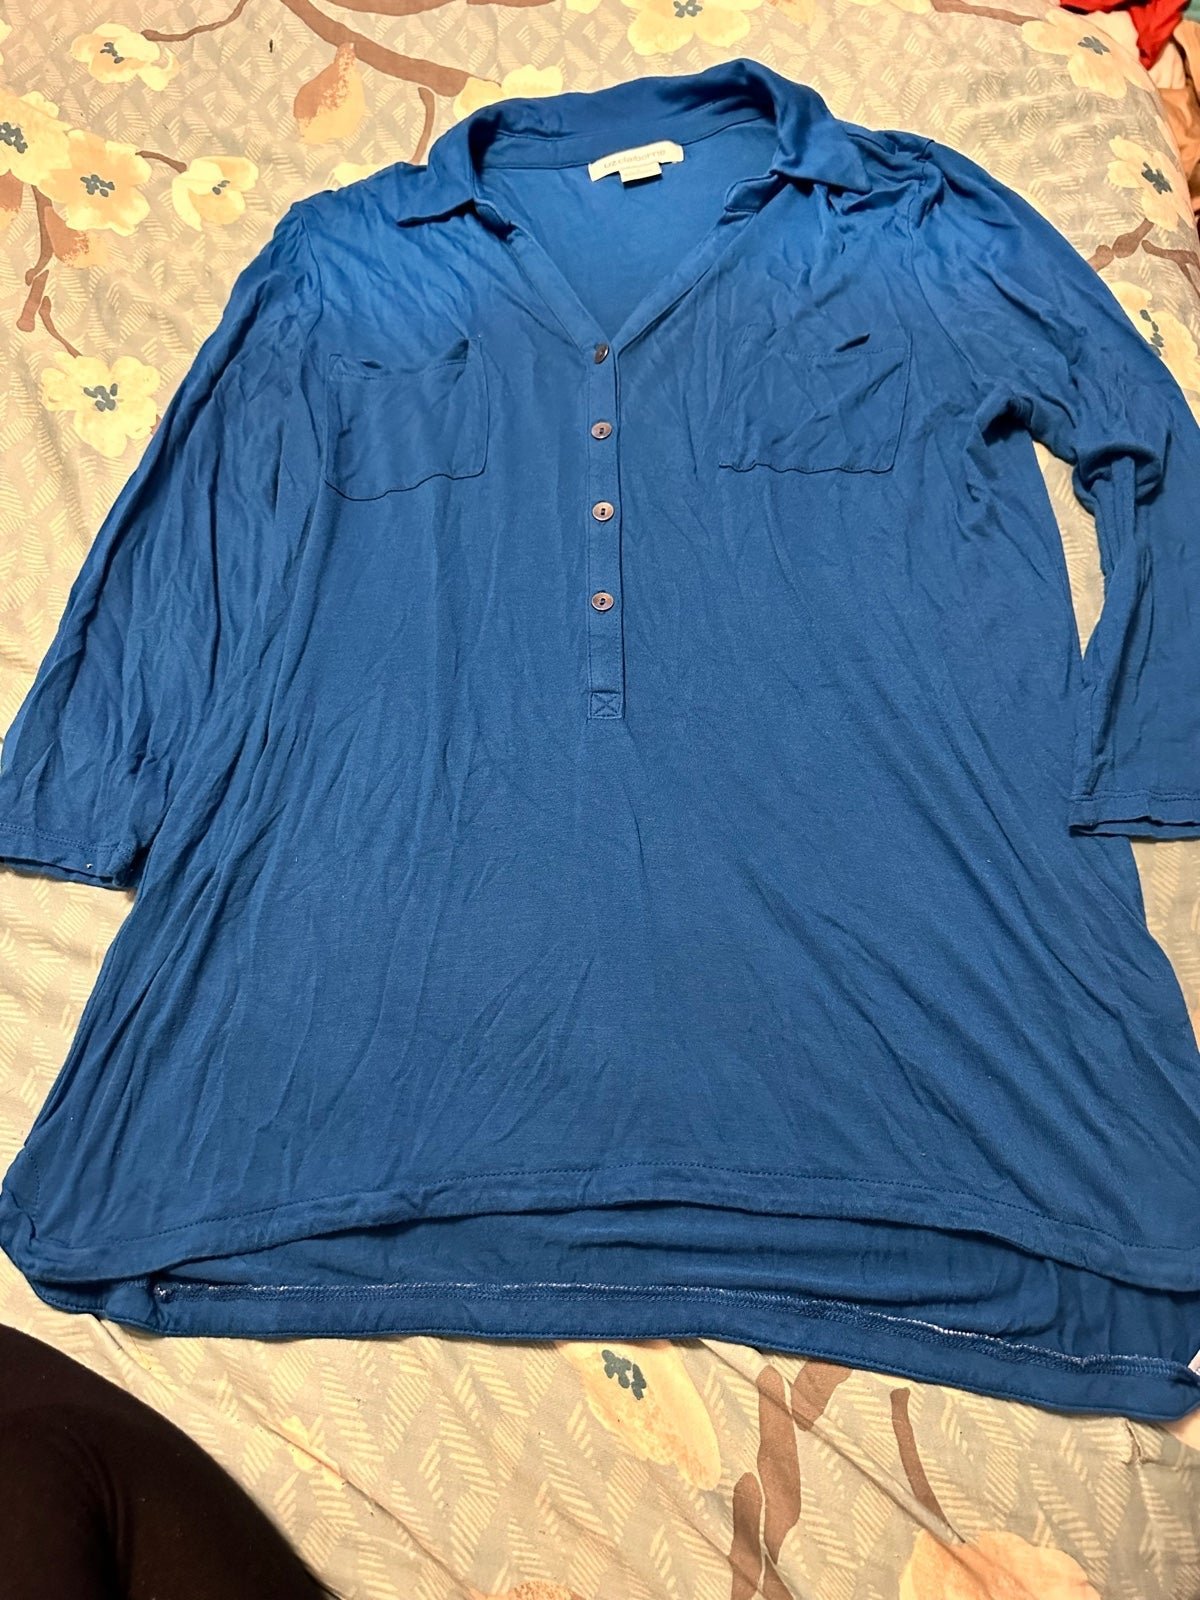 the Lowest price Blue Liz Claiborne large shirt Ok1xa70